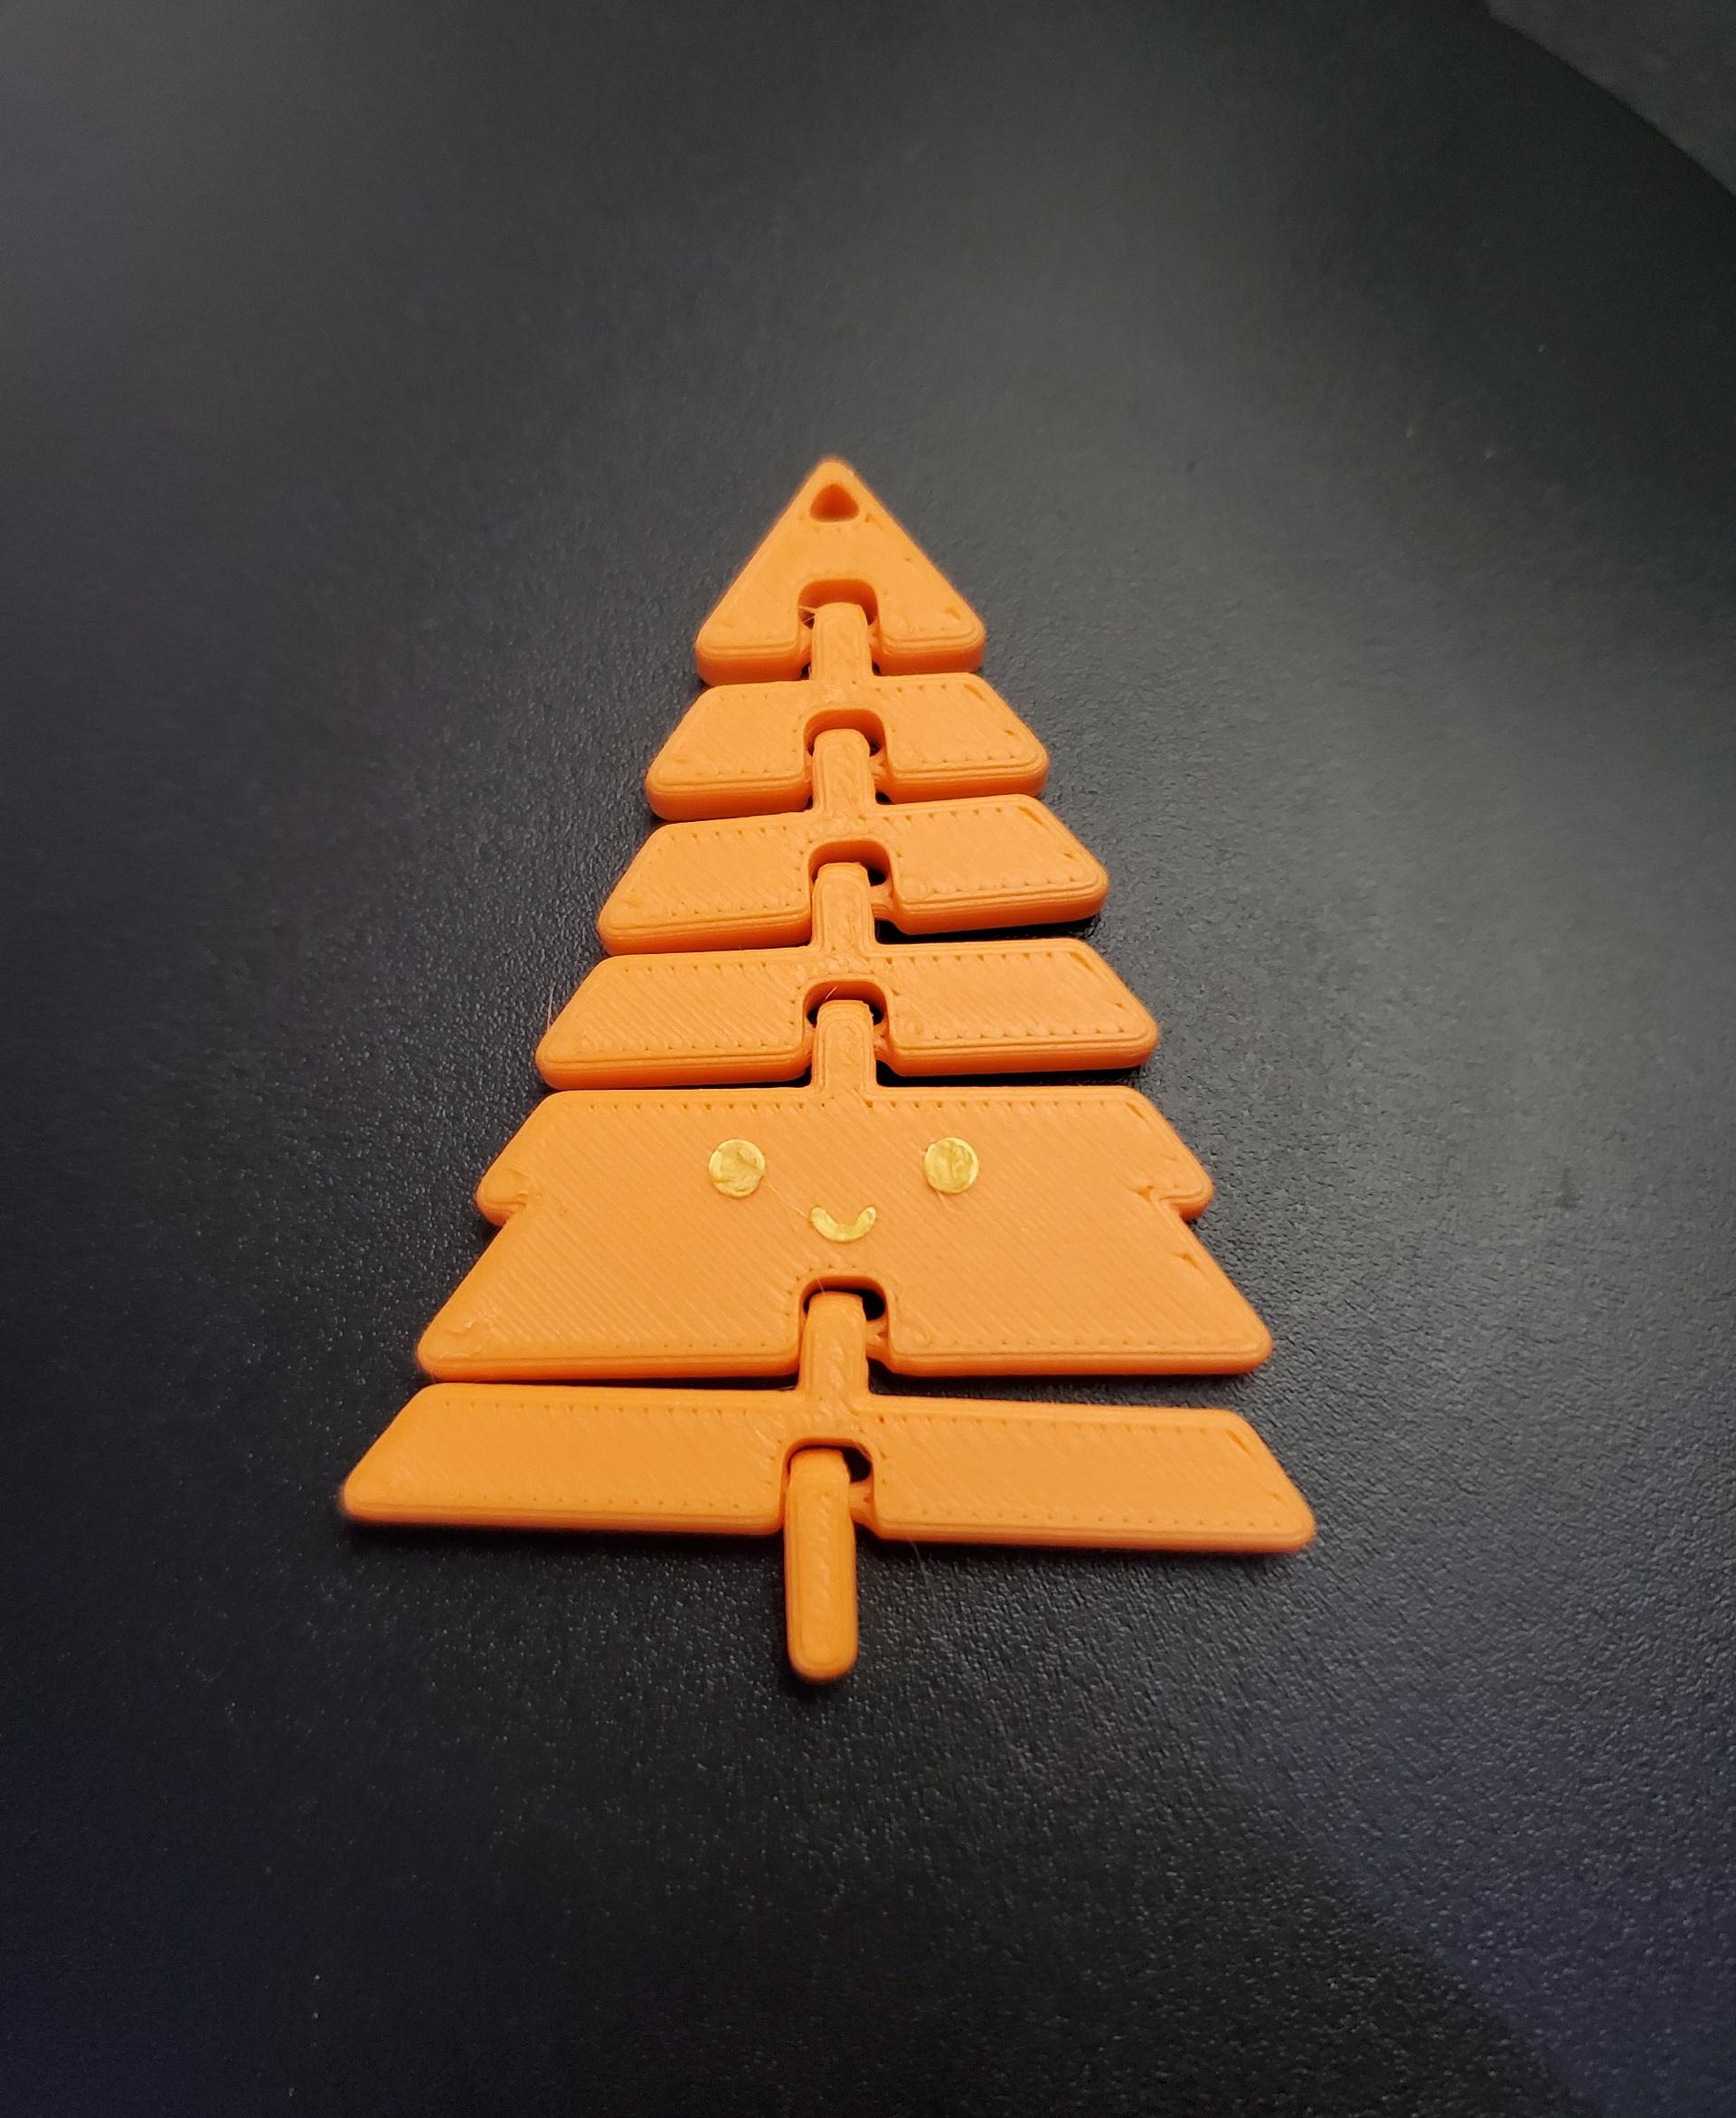 Articulated Kawaii Christmas Tree Keychain - Print in place fidget toy - 3mf - polyterra sunrise orange - 3d model